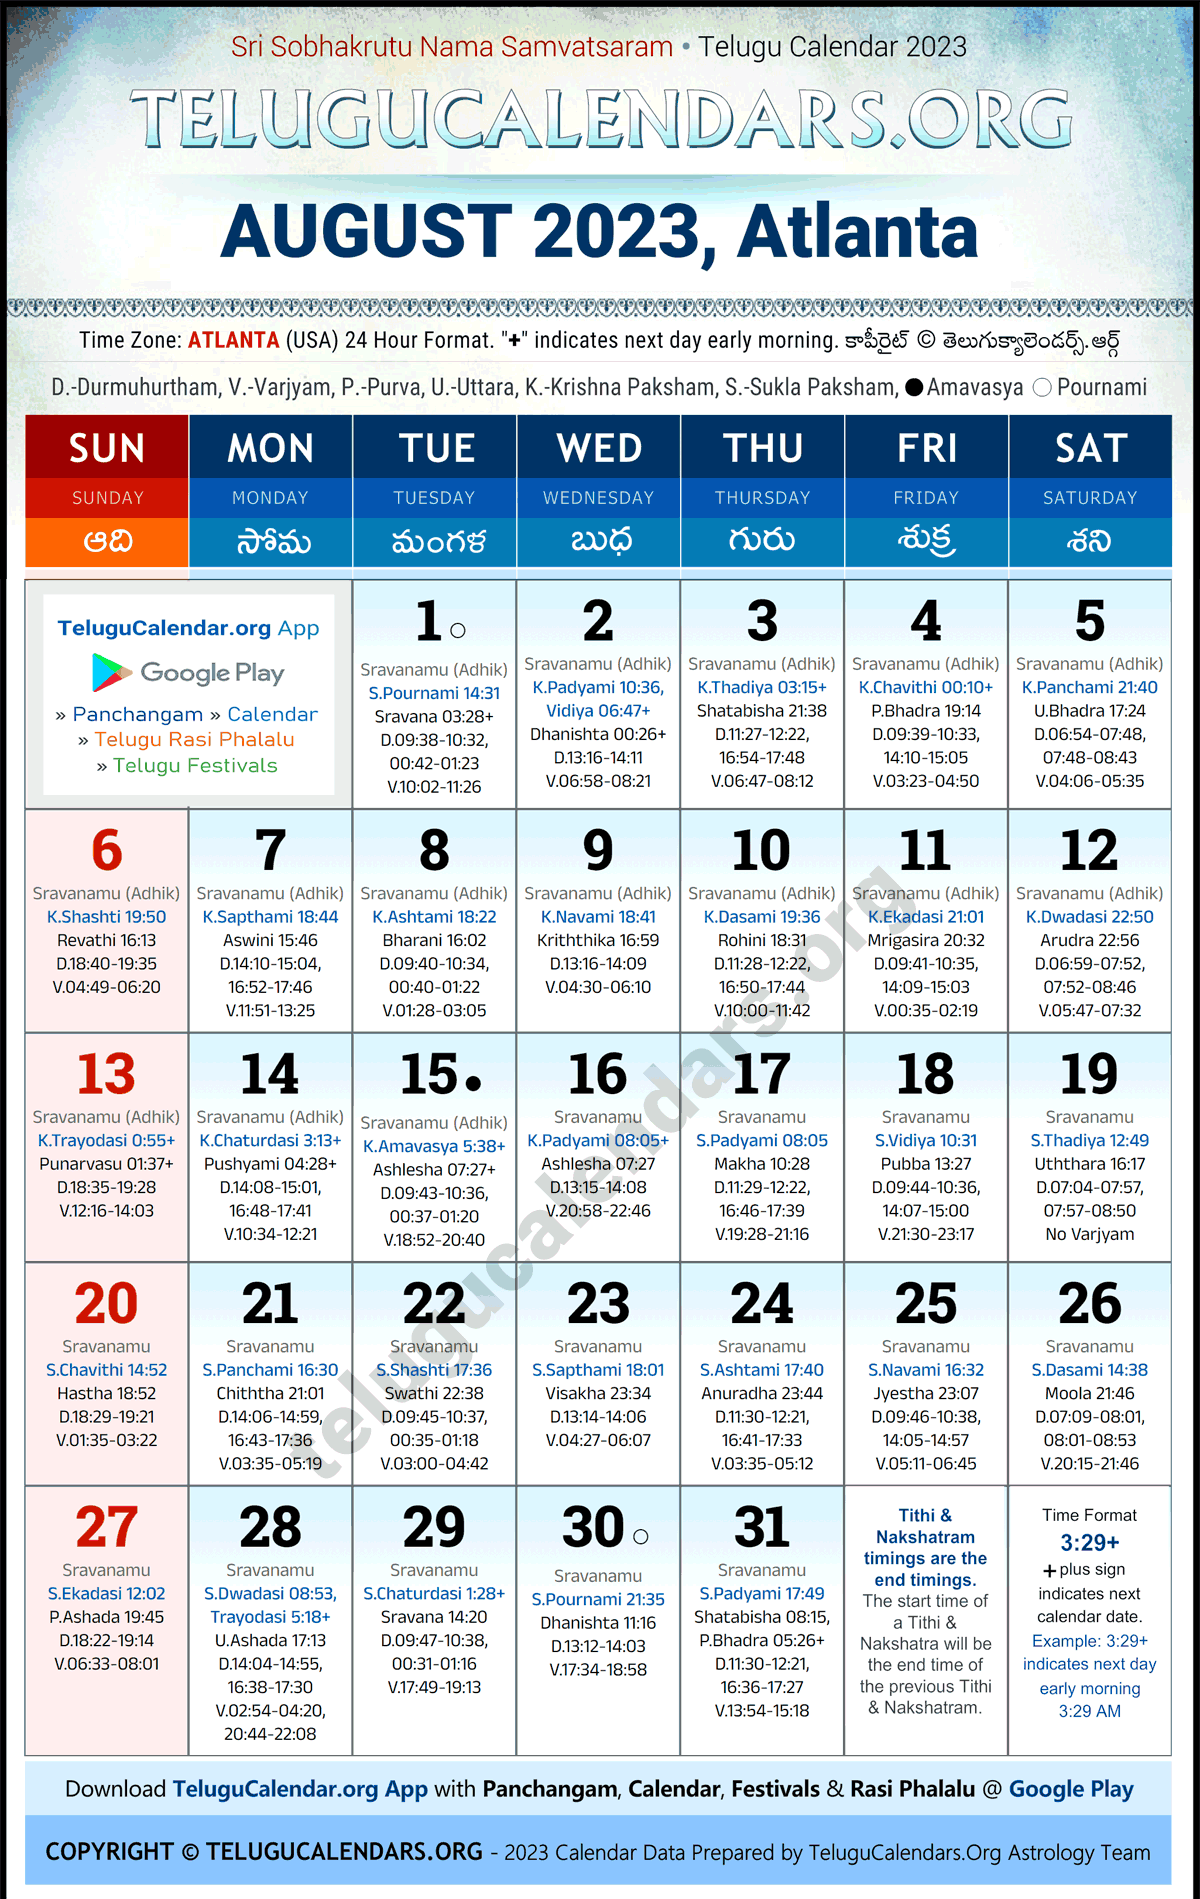 Telugu Calendar 2023 August Festivals for Atlanta